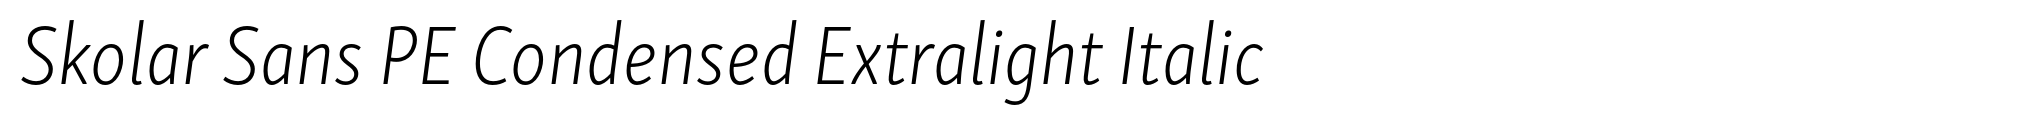 Skolar Sans PE Condensed Extralight Italic image